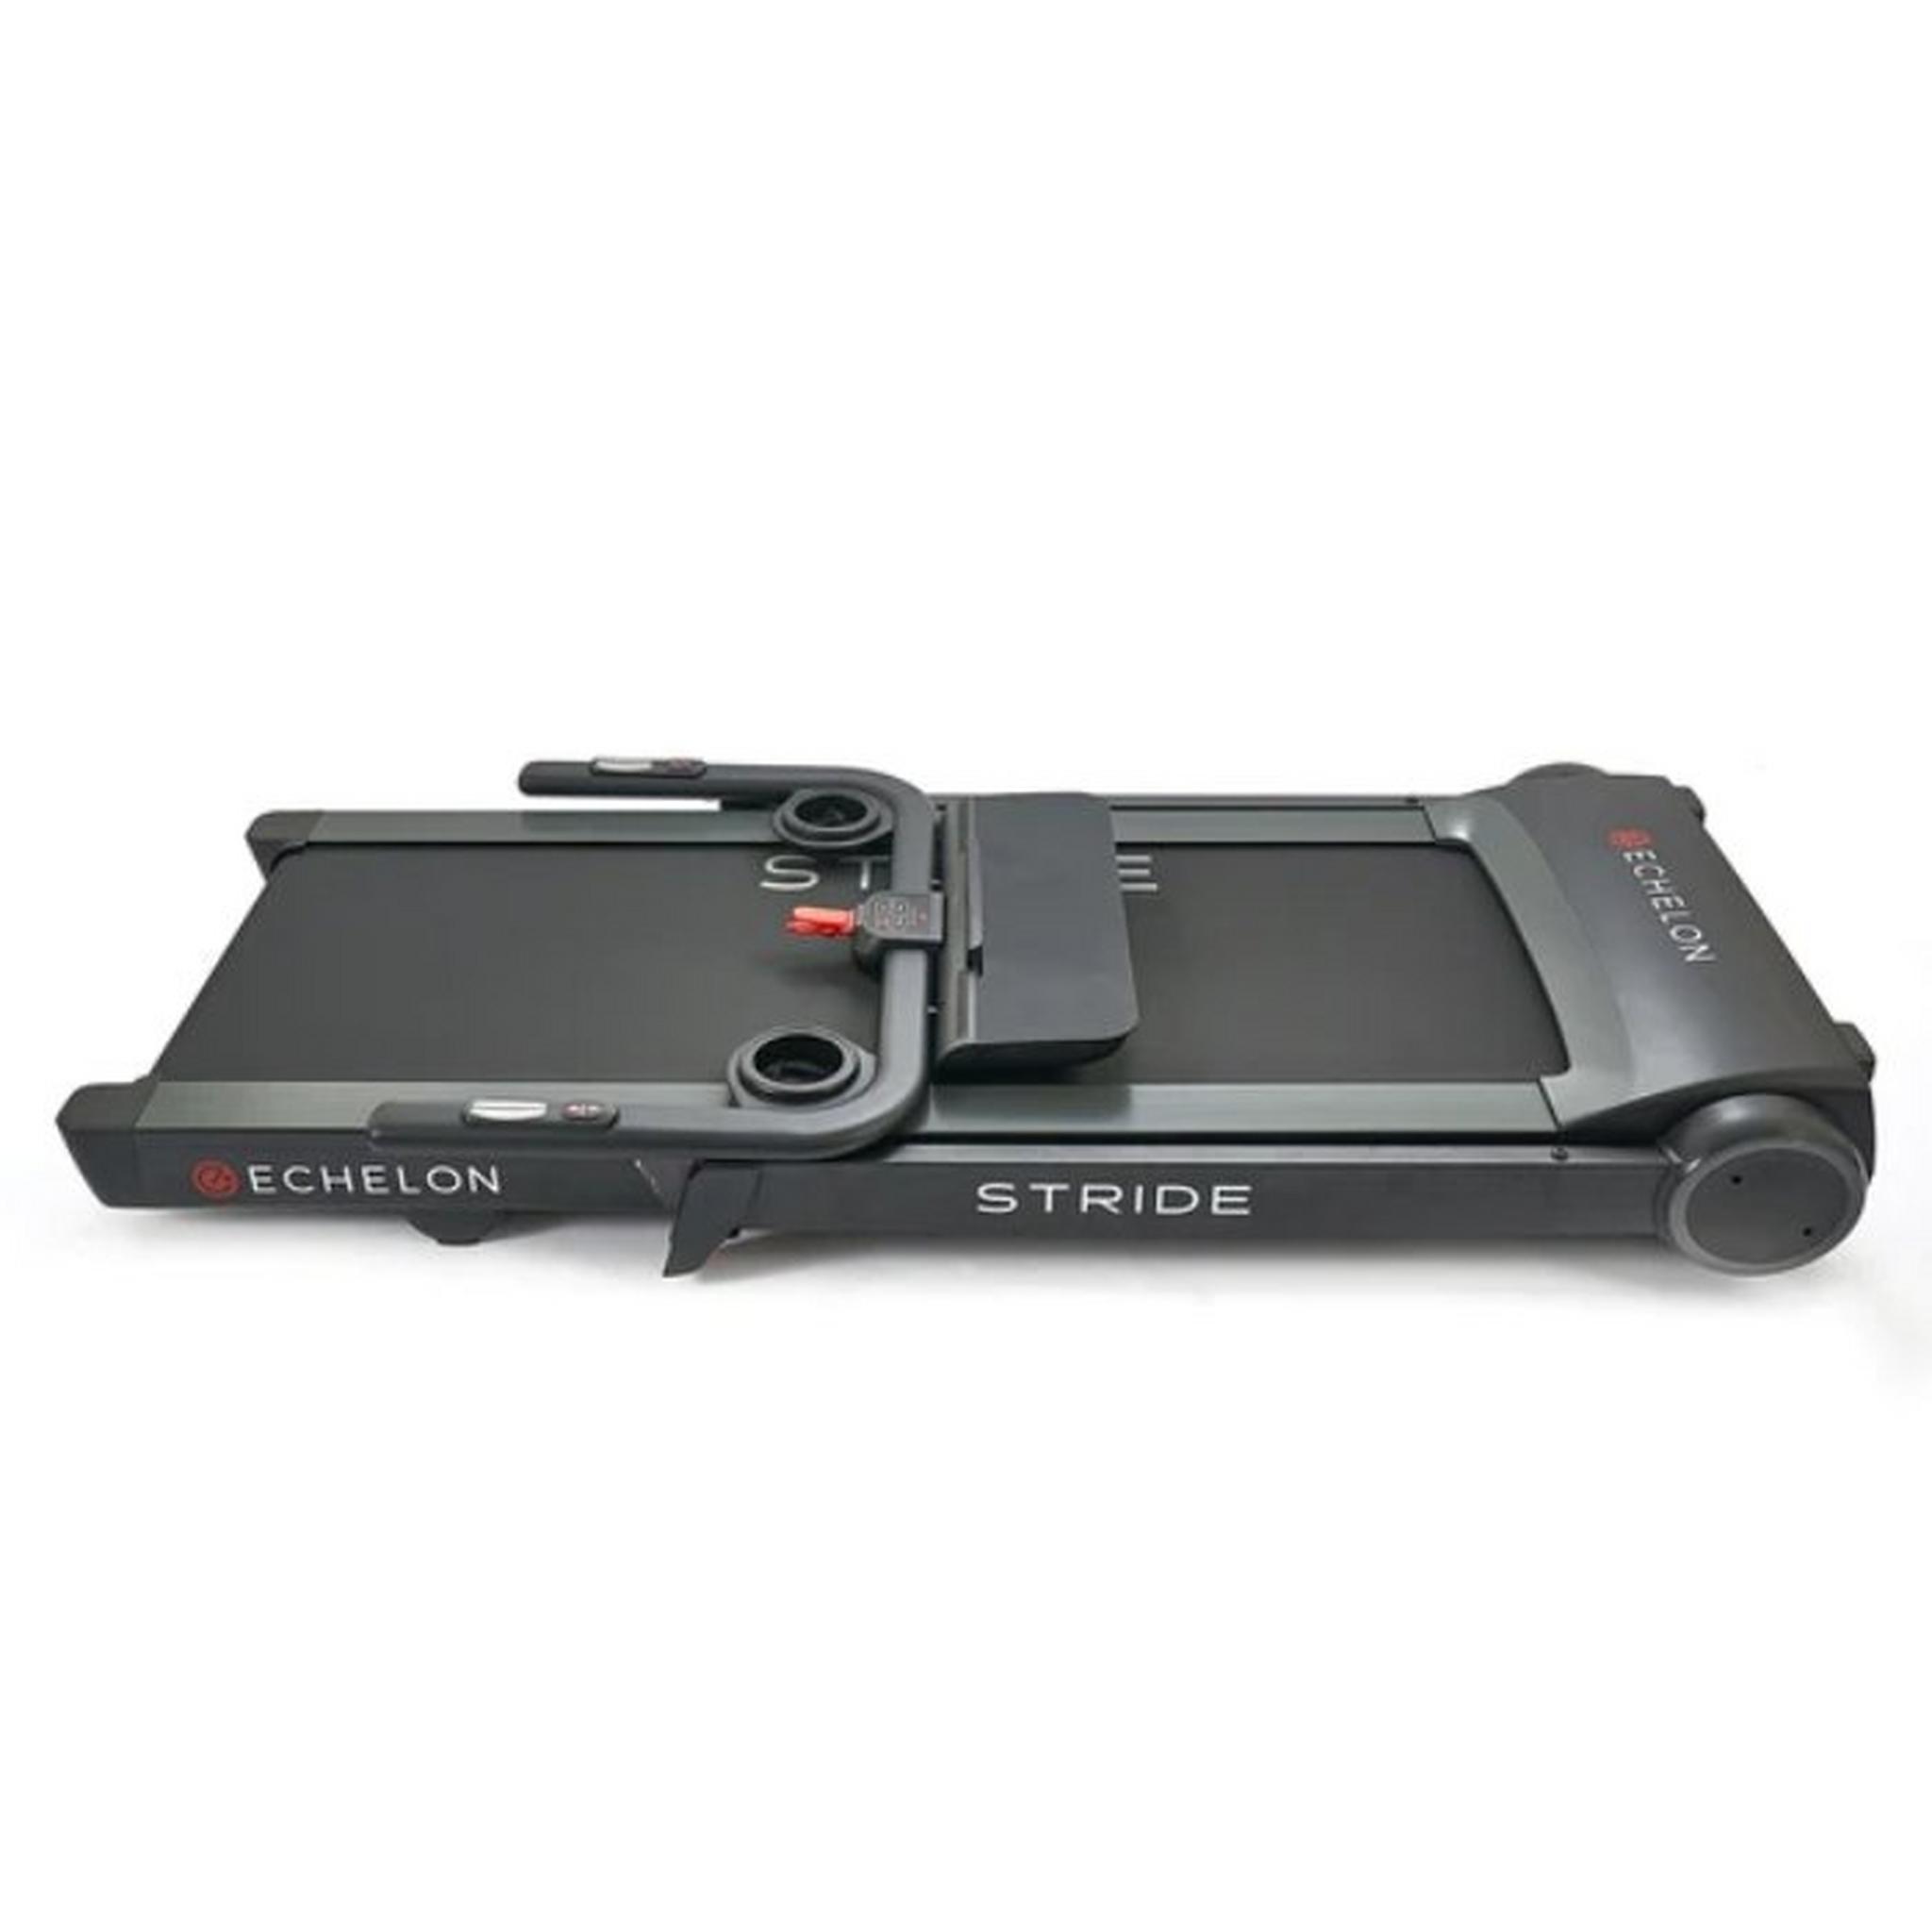 Echelon Stride Auto Fold Treadmill (ECH-STRIDE-ST1)